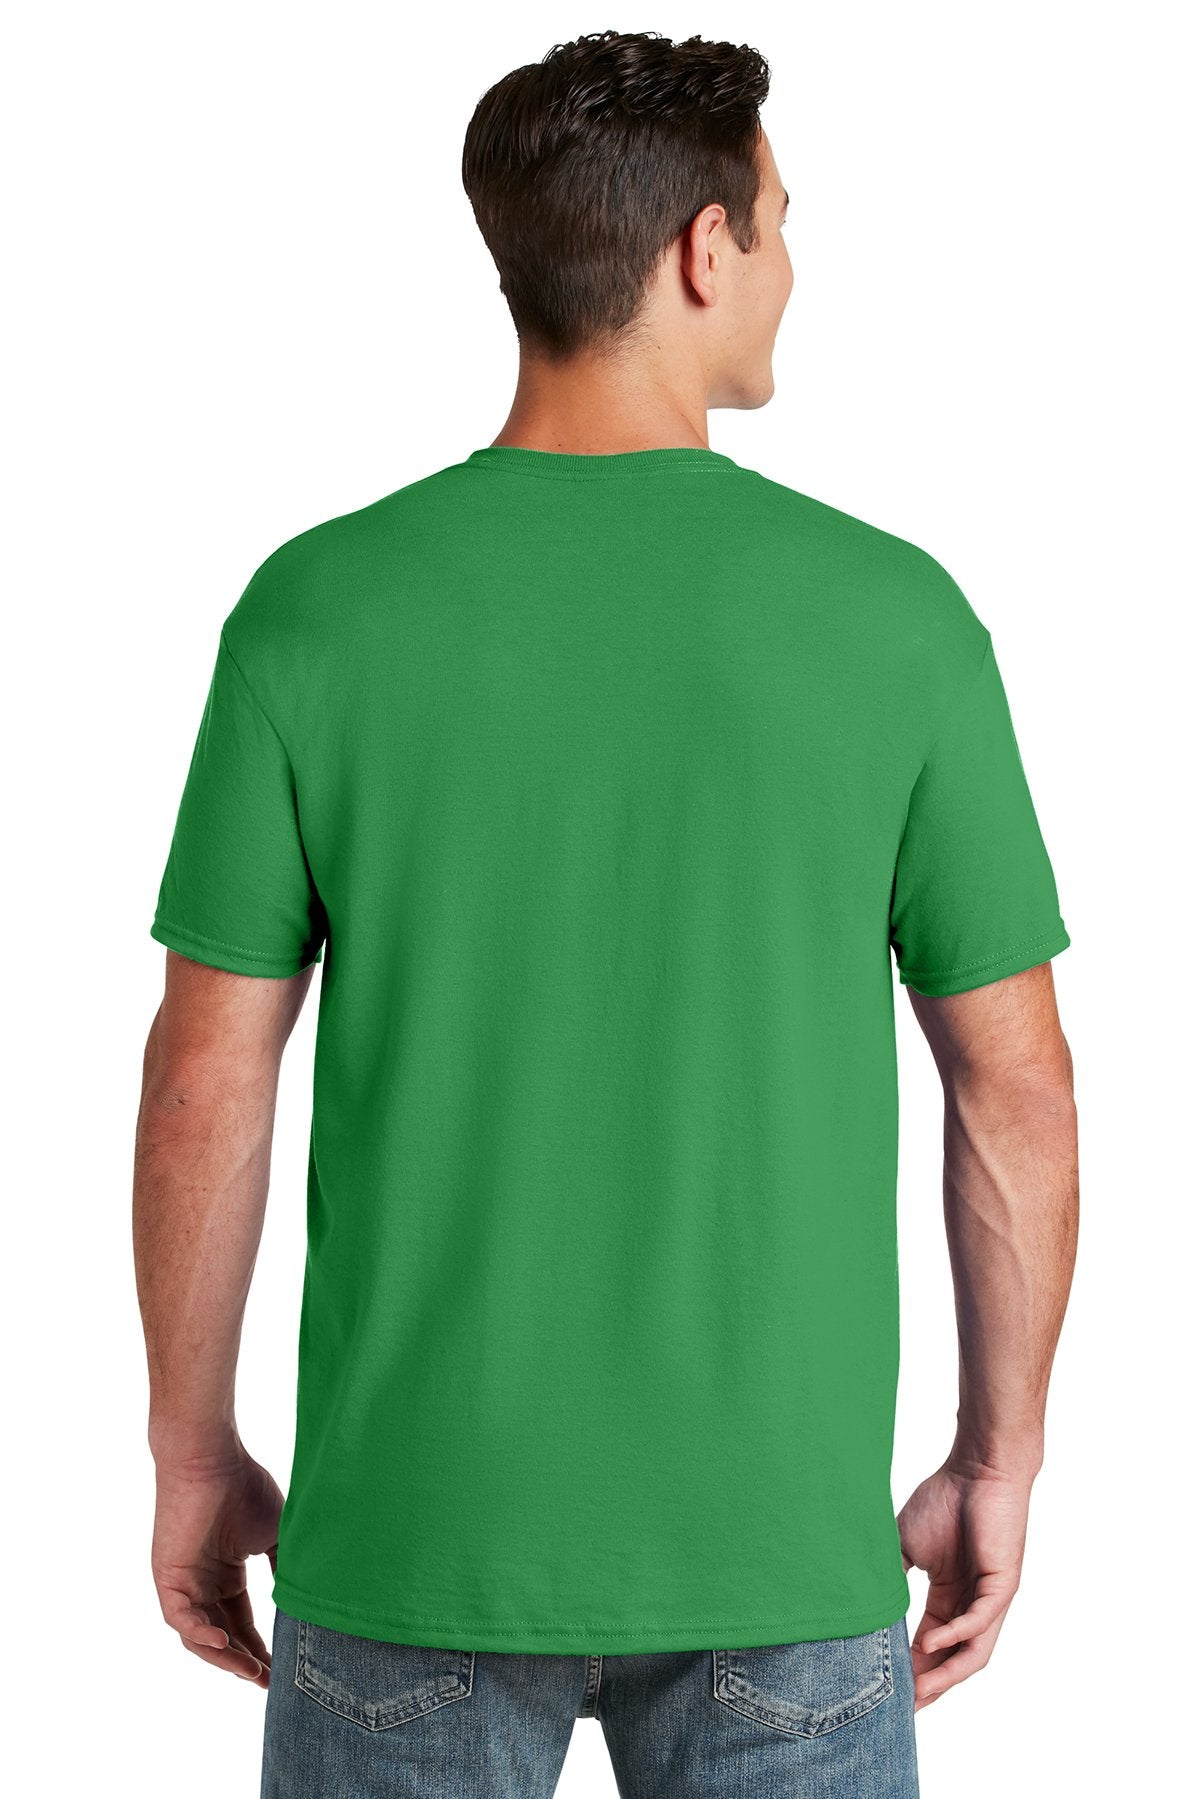 Jerzees Dri-Power Active 50/50 Cotton/Poly T-Shirt 29M Kelly